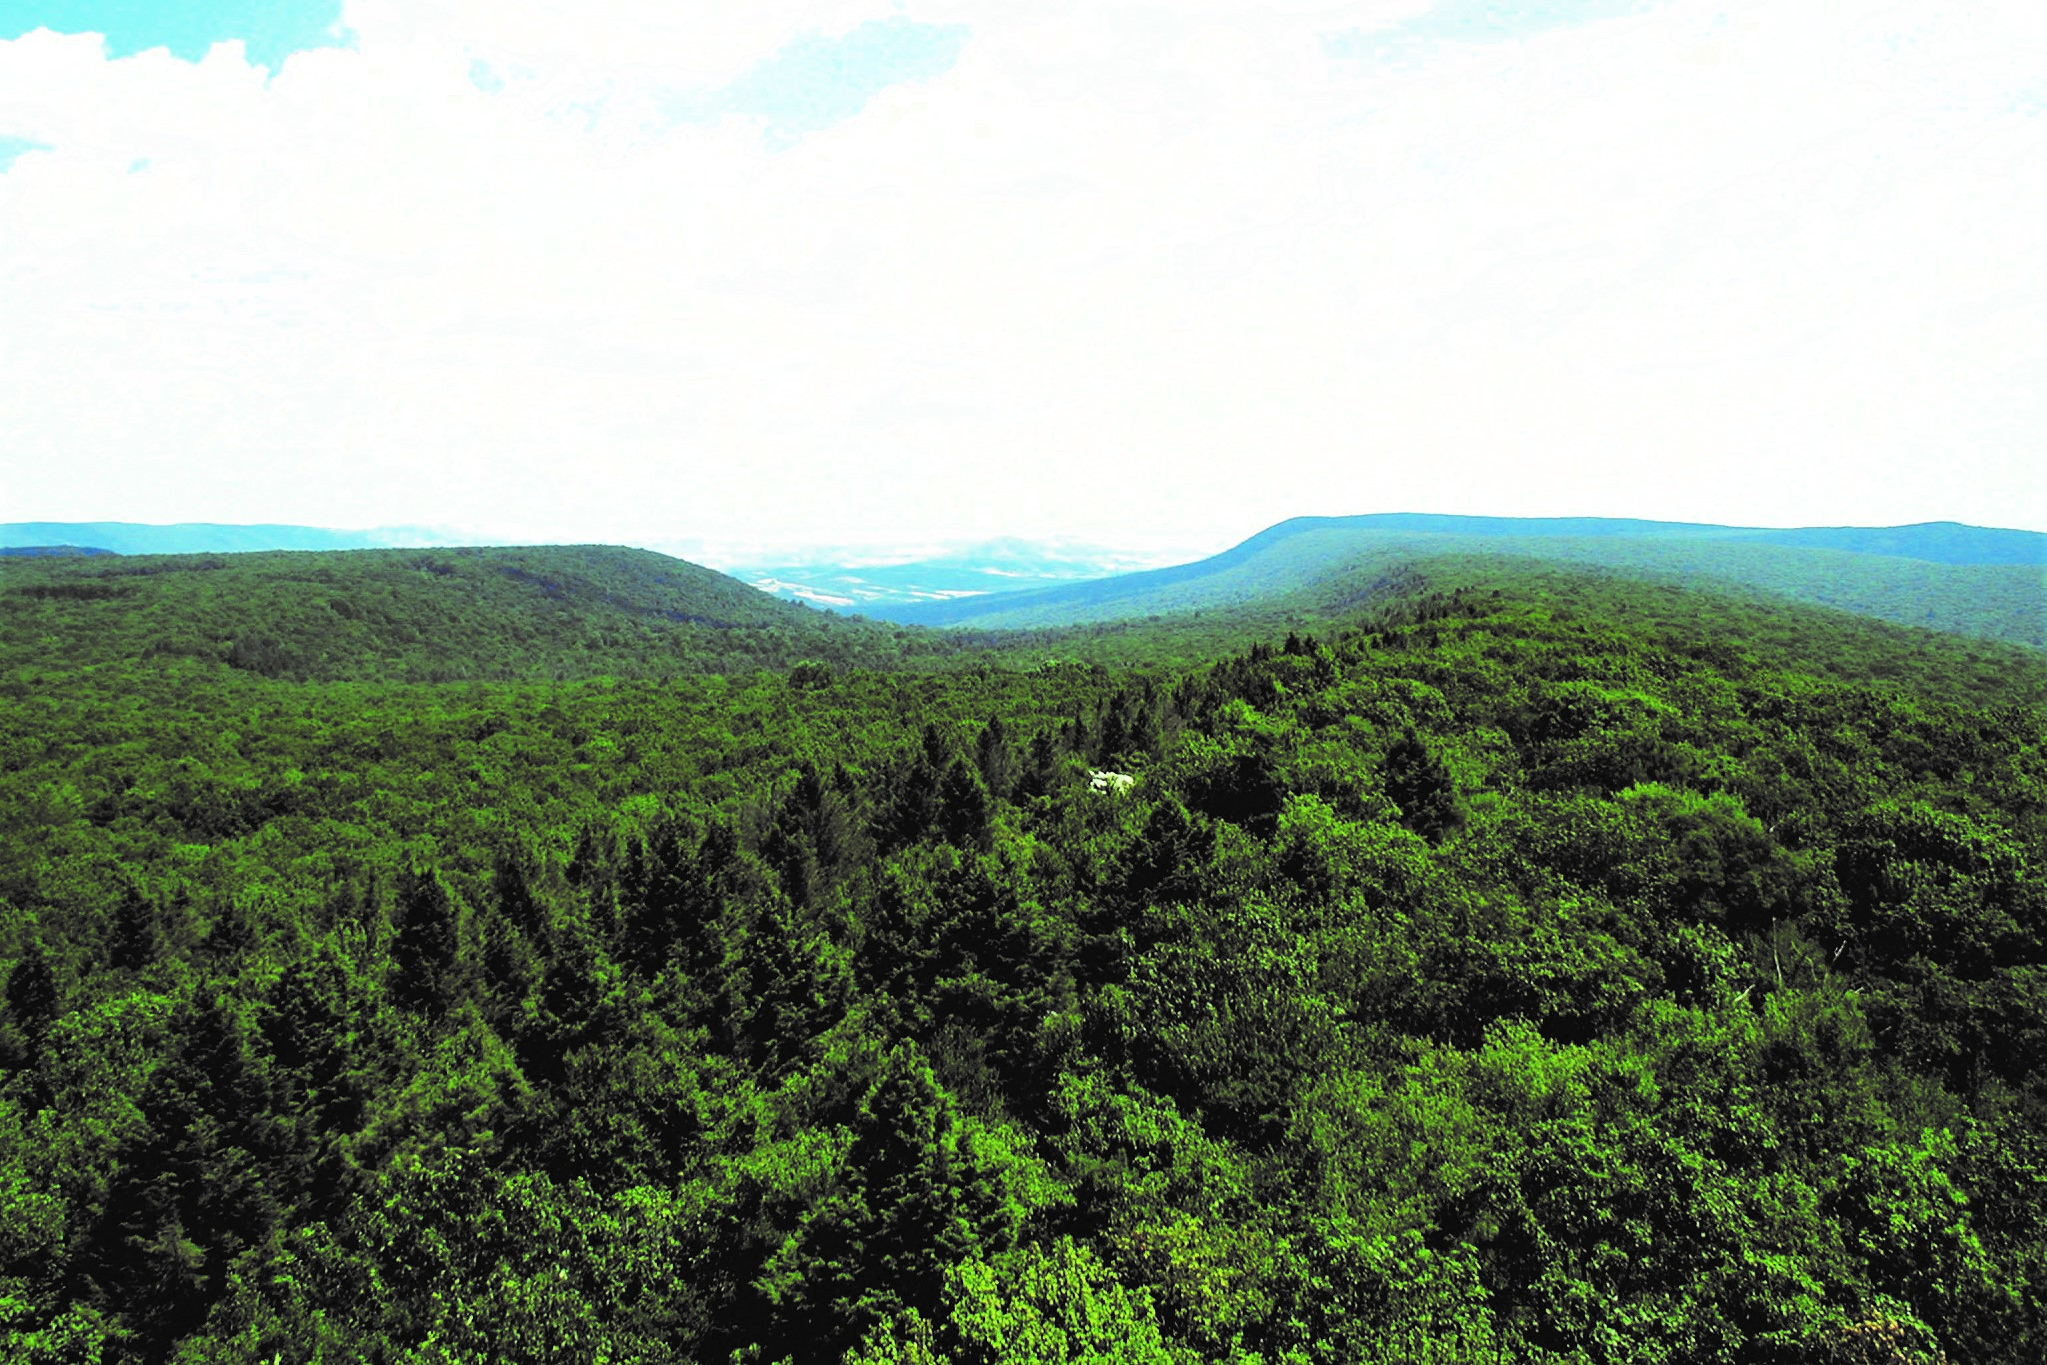 Pennsylvania’s Conservation Landscapes